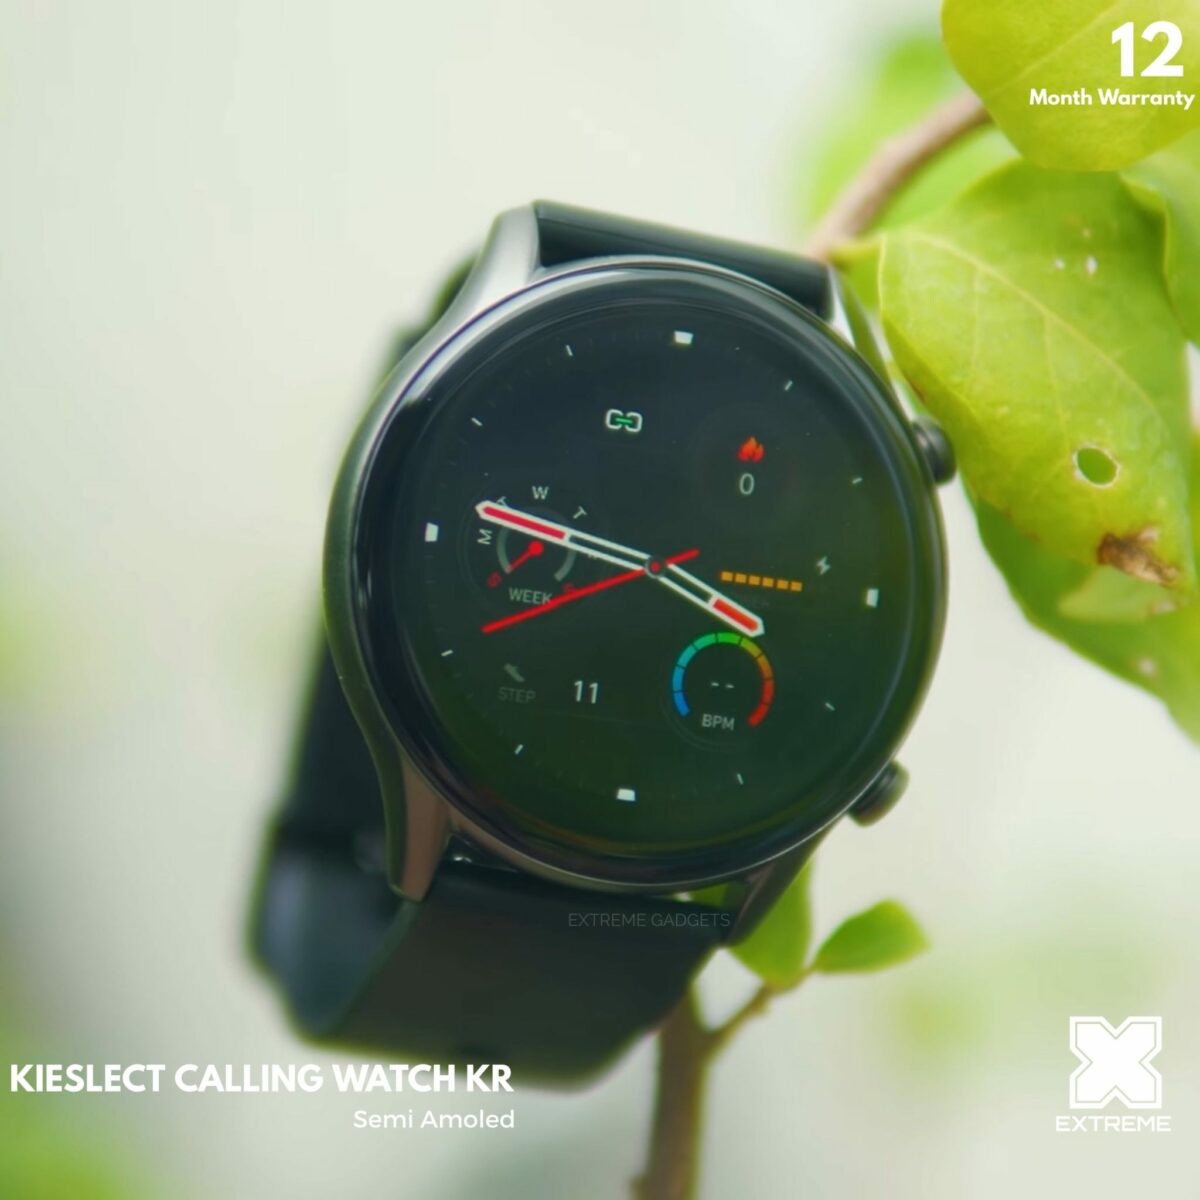 Kieslect KR Smart Calling Smartwatch